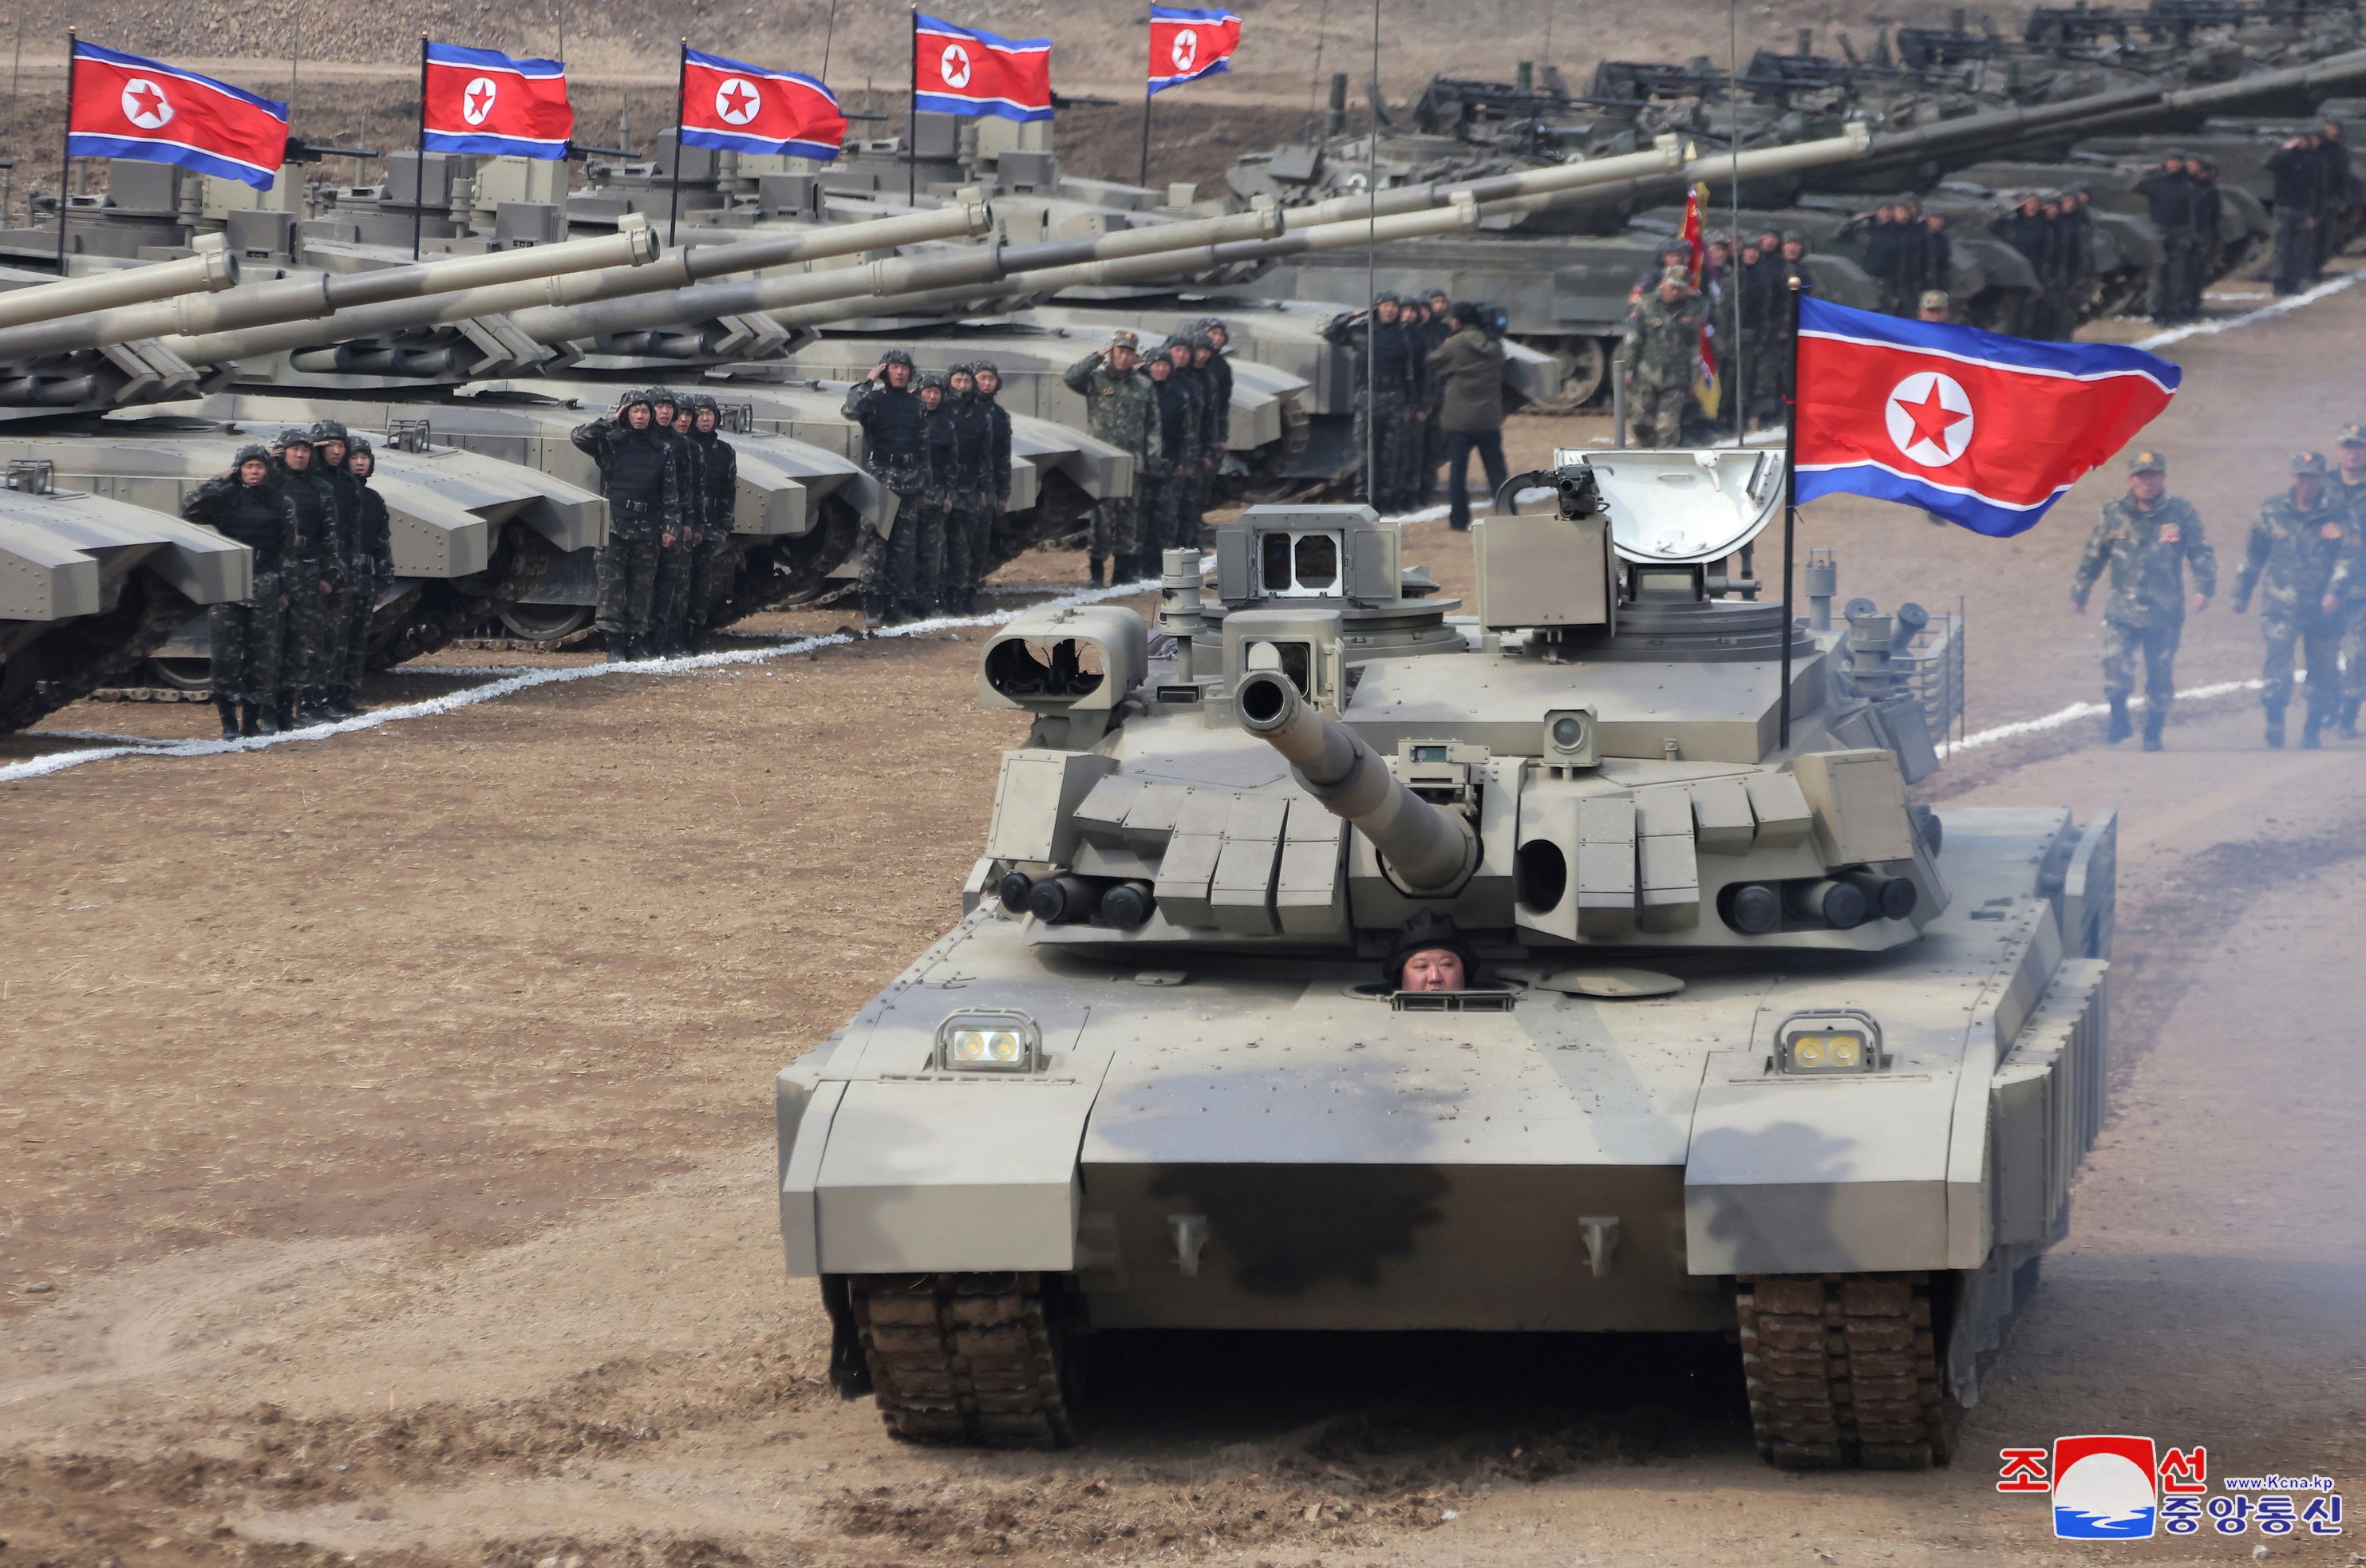 North Korean Supreme leader Kim Jong Un drives new-type tank during drills